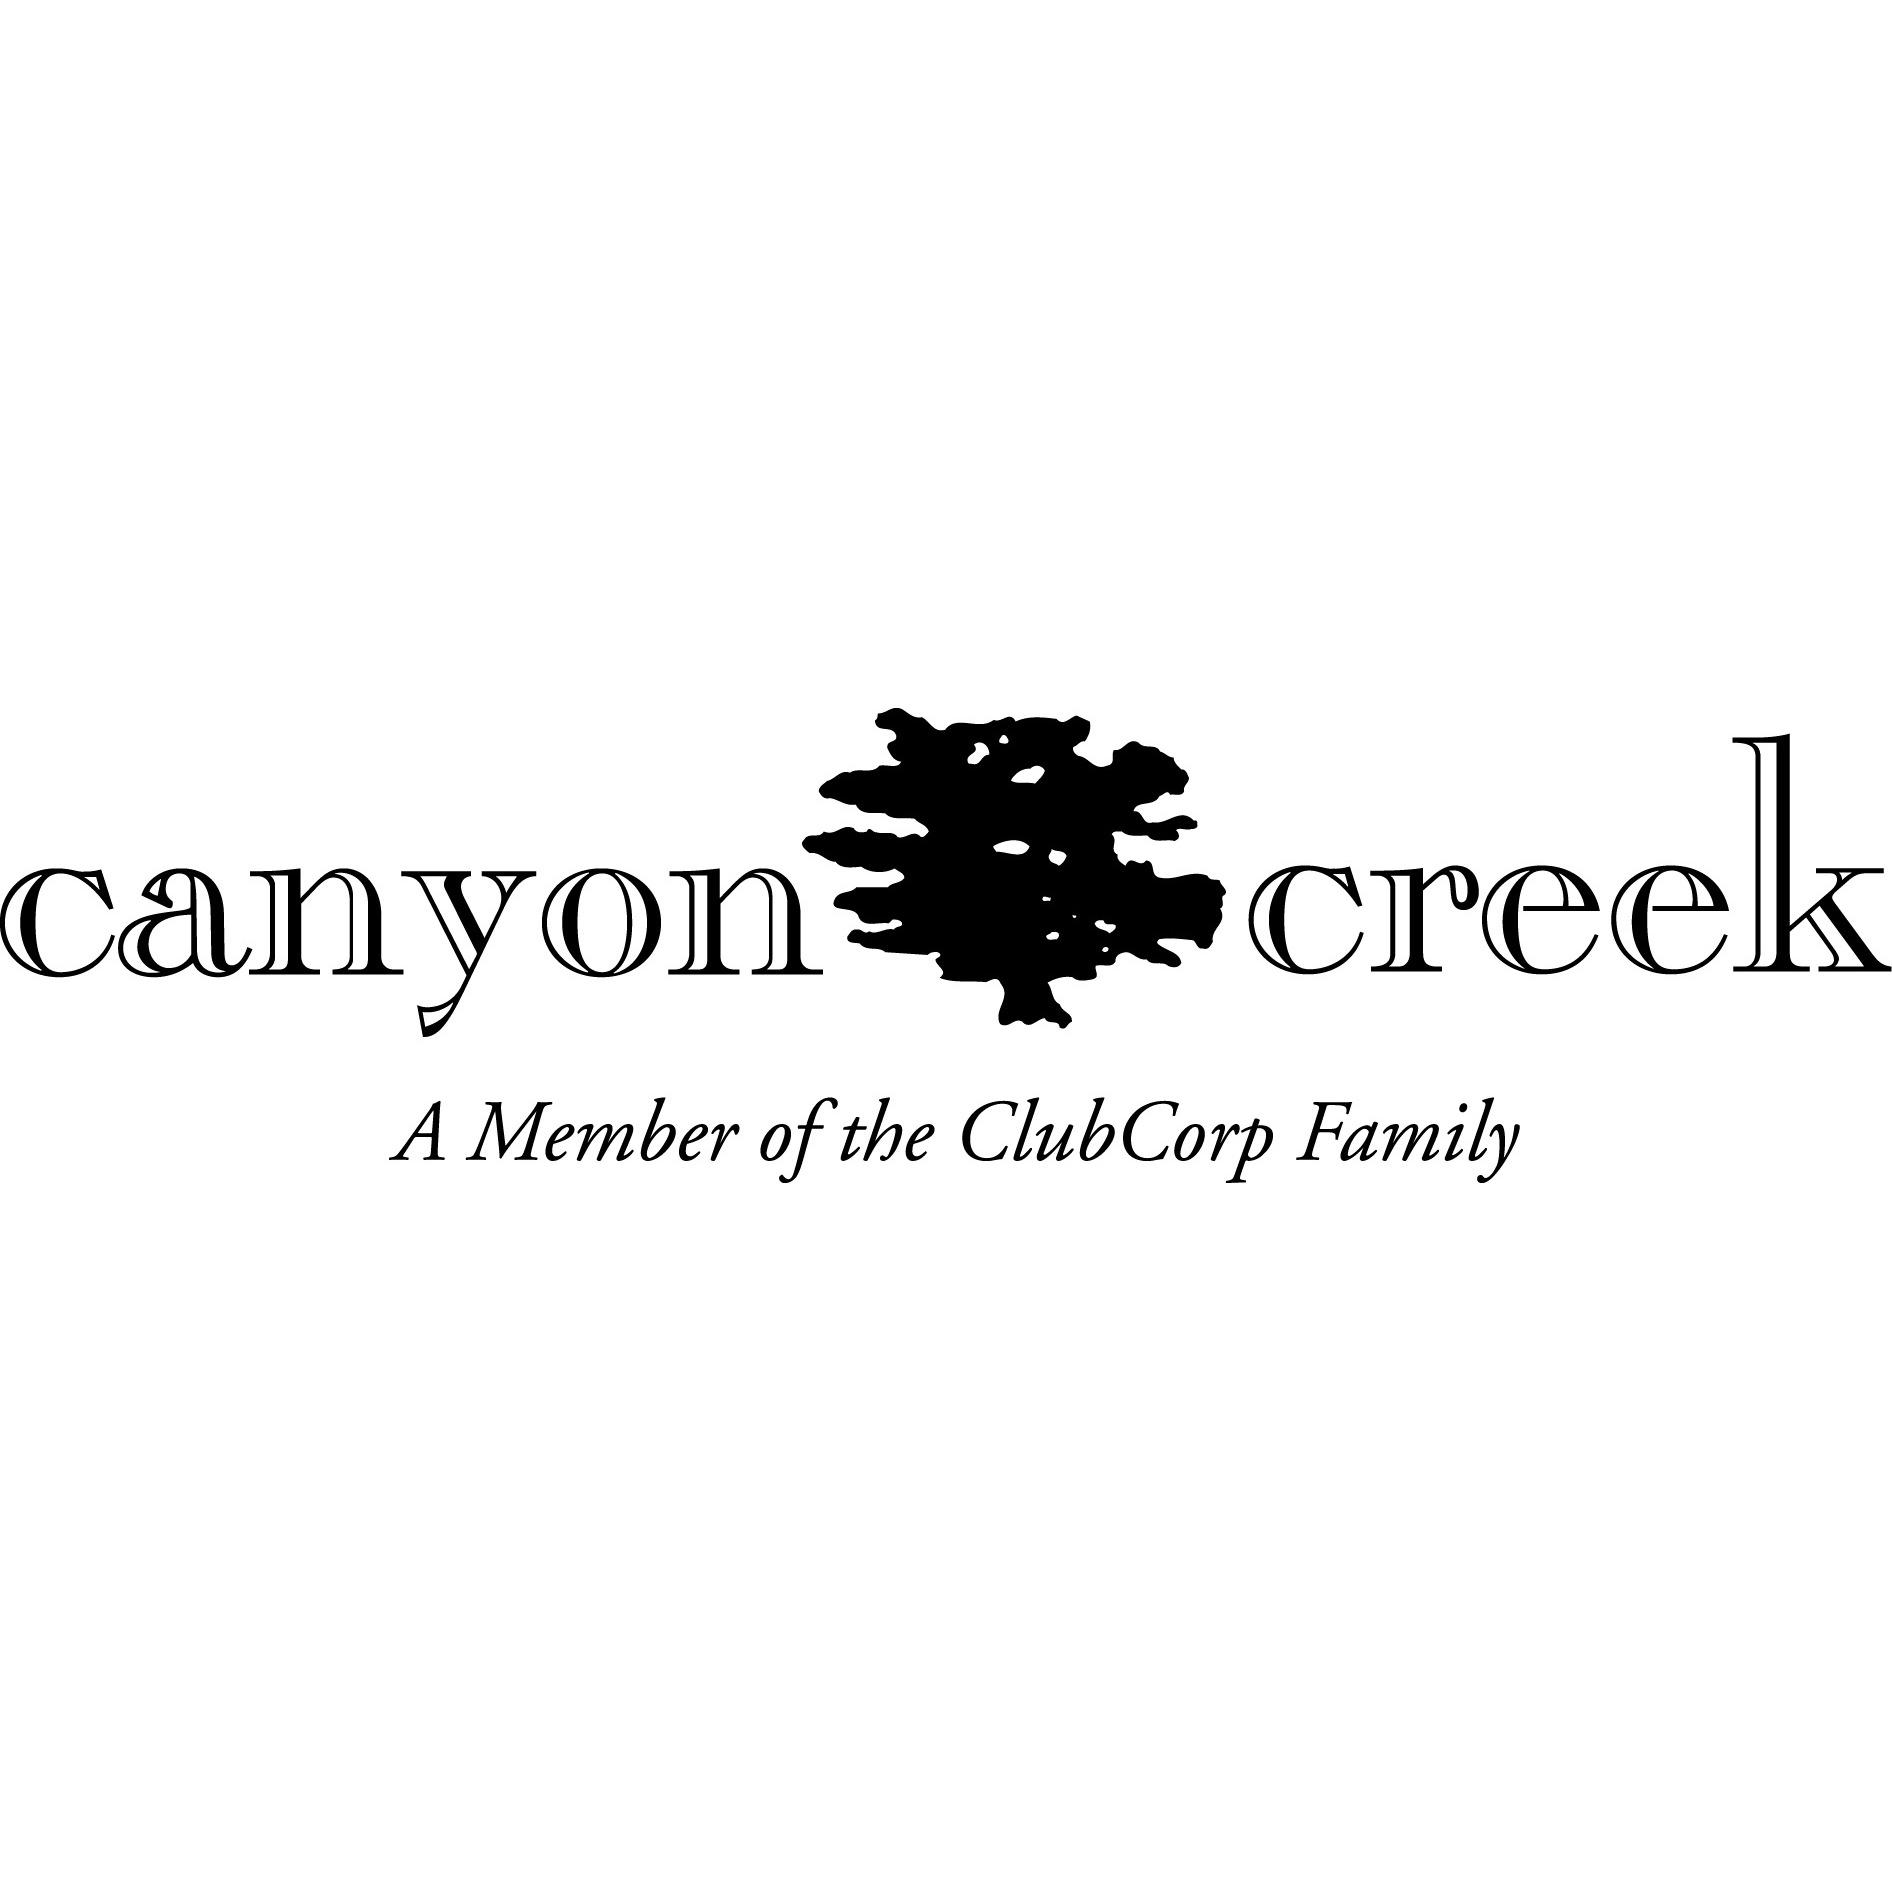 Canyon Creek Country Club Logo